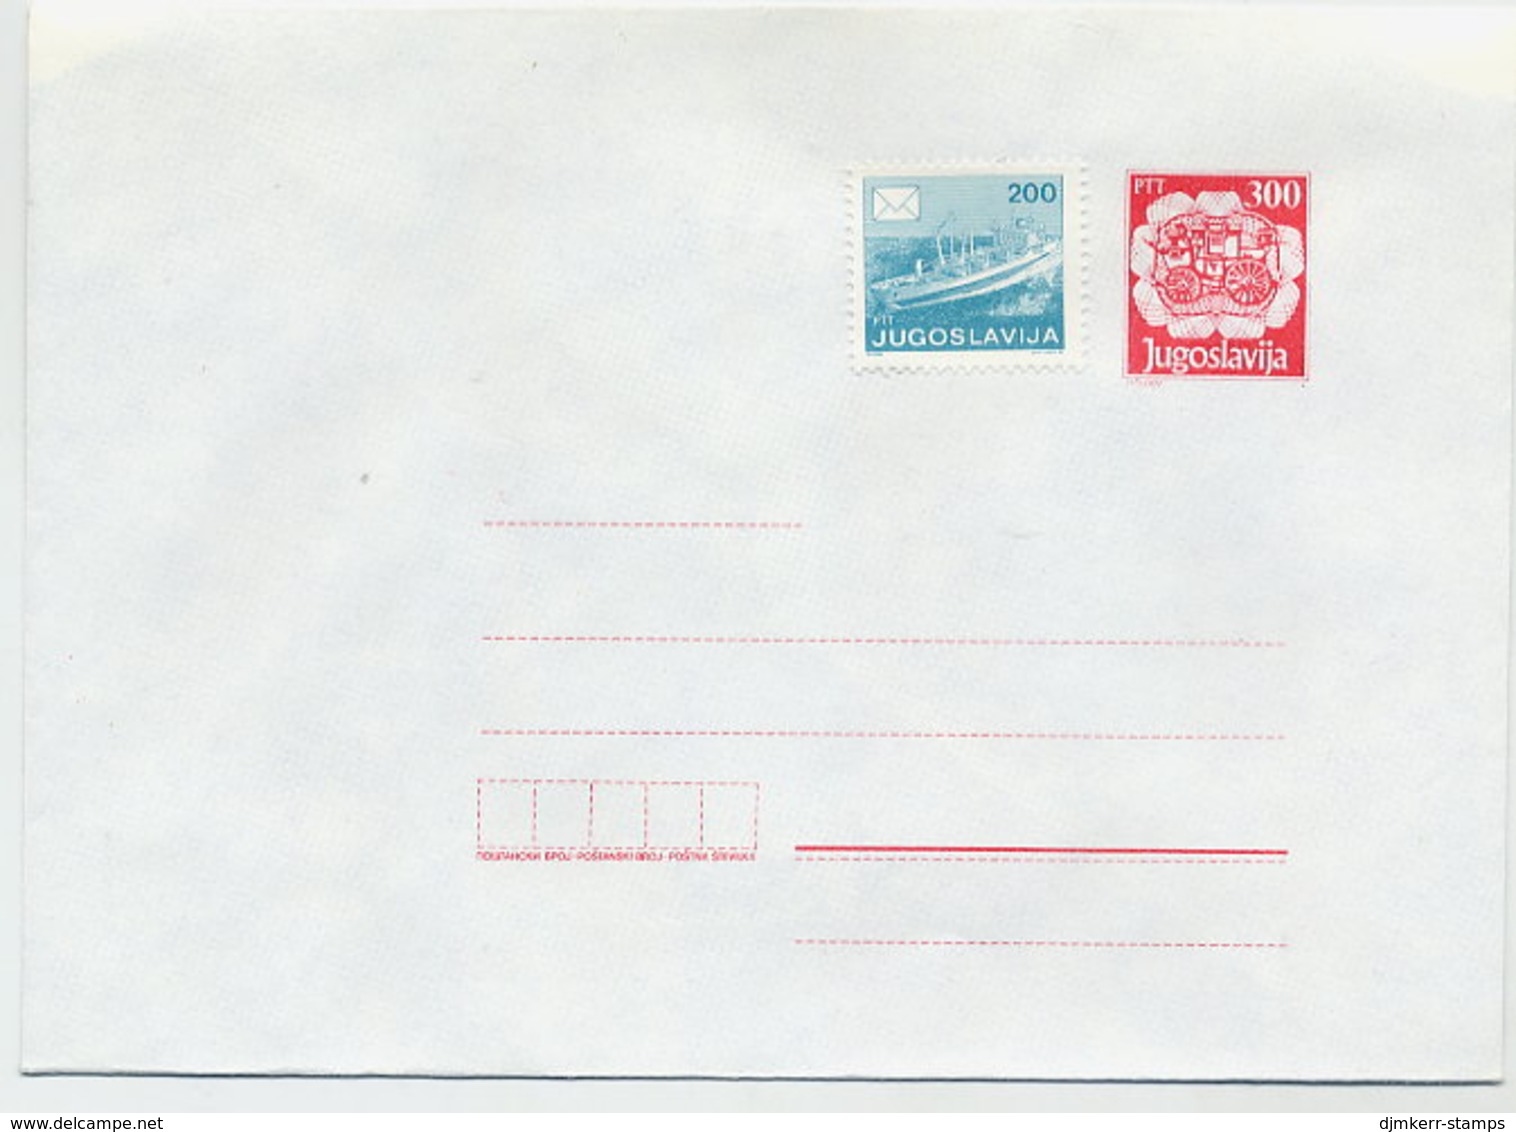 YUGOSLAVIA 1989 Postal Coach 300. D. Envelope + 200 D.stamp, Unused.  Michel U89 - Ganzsachen